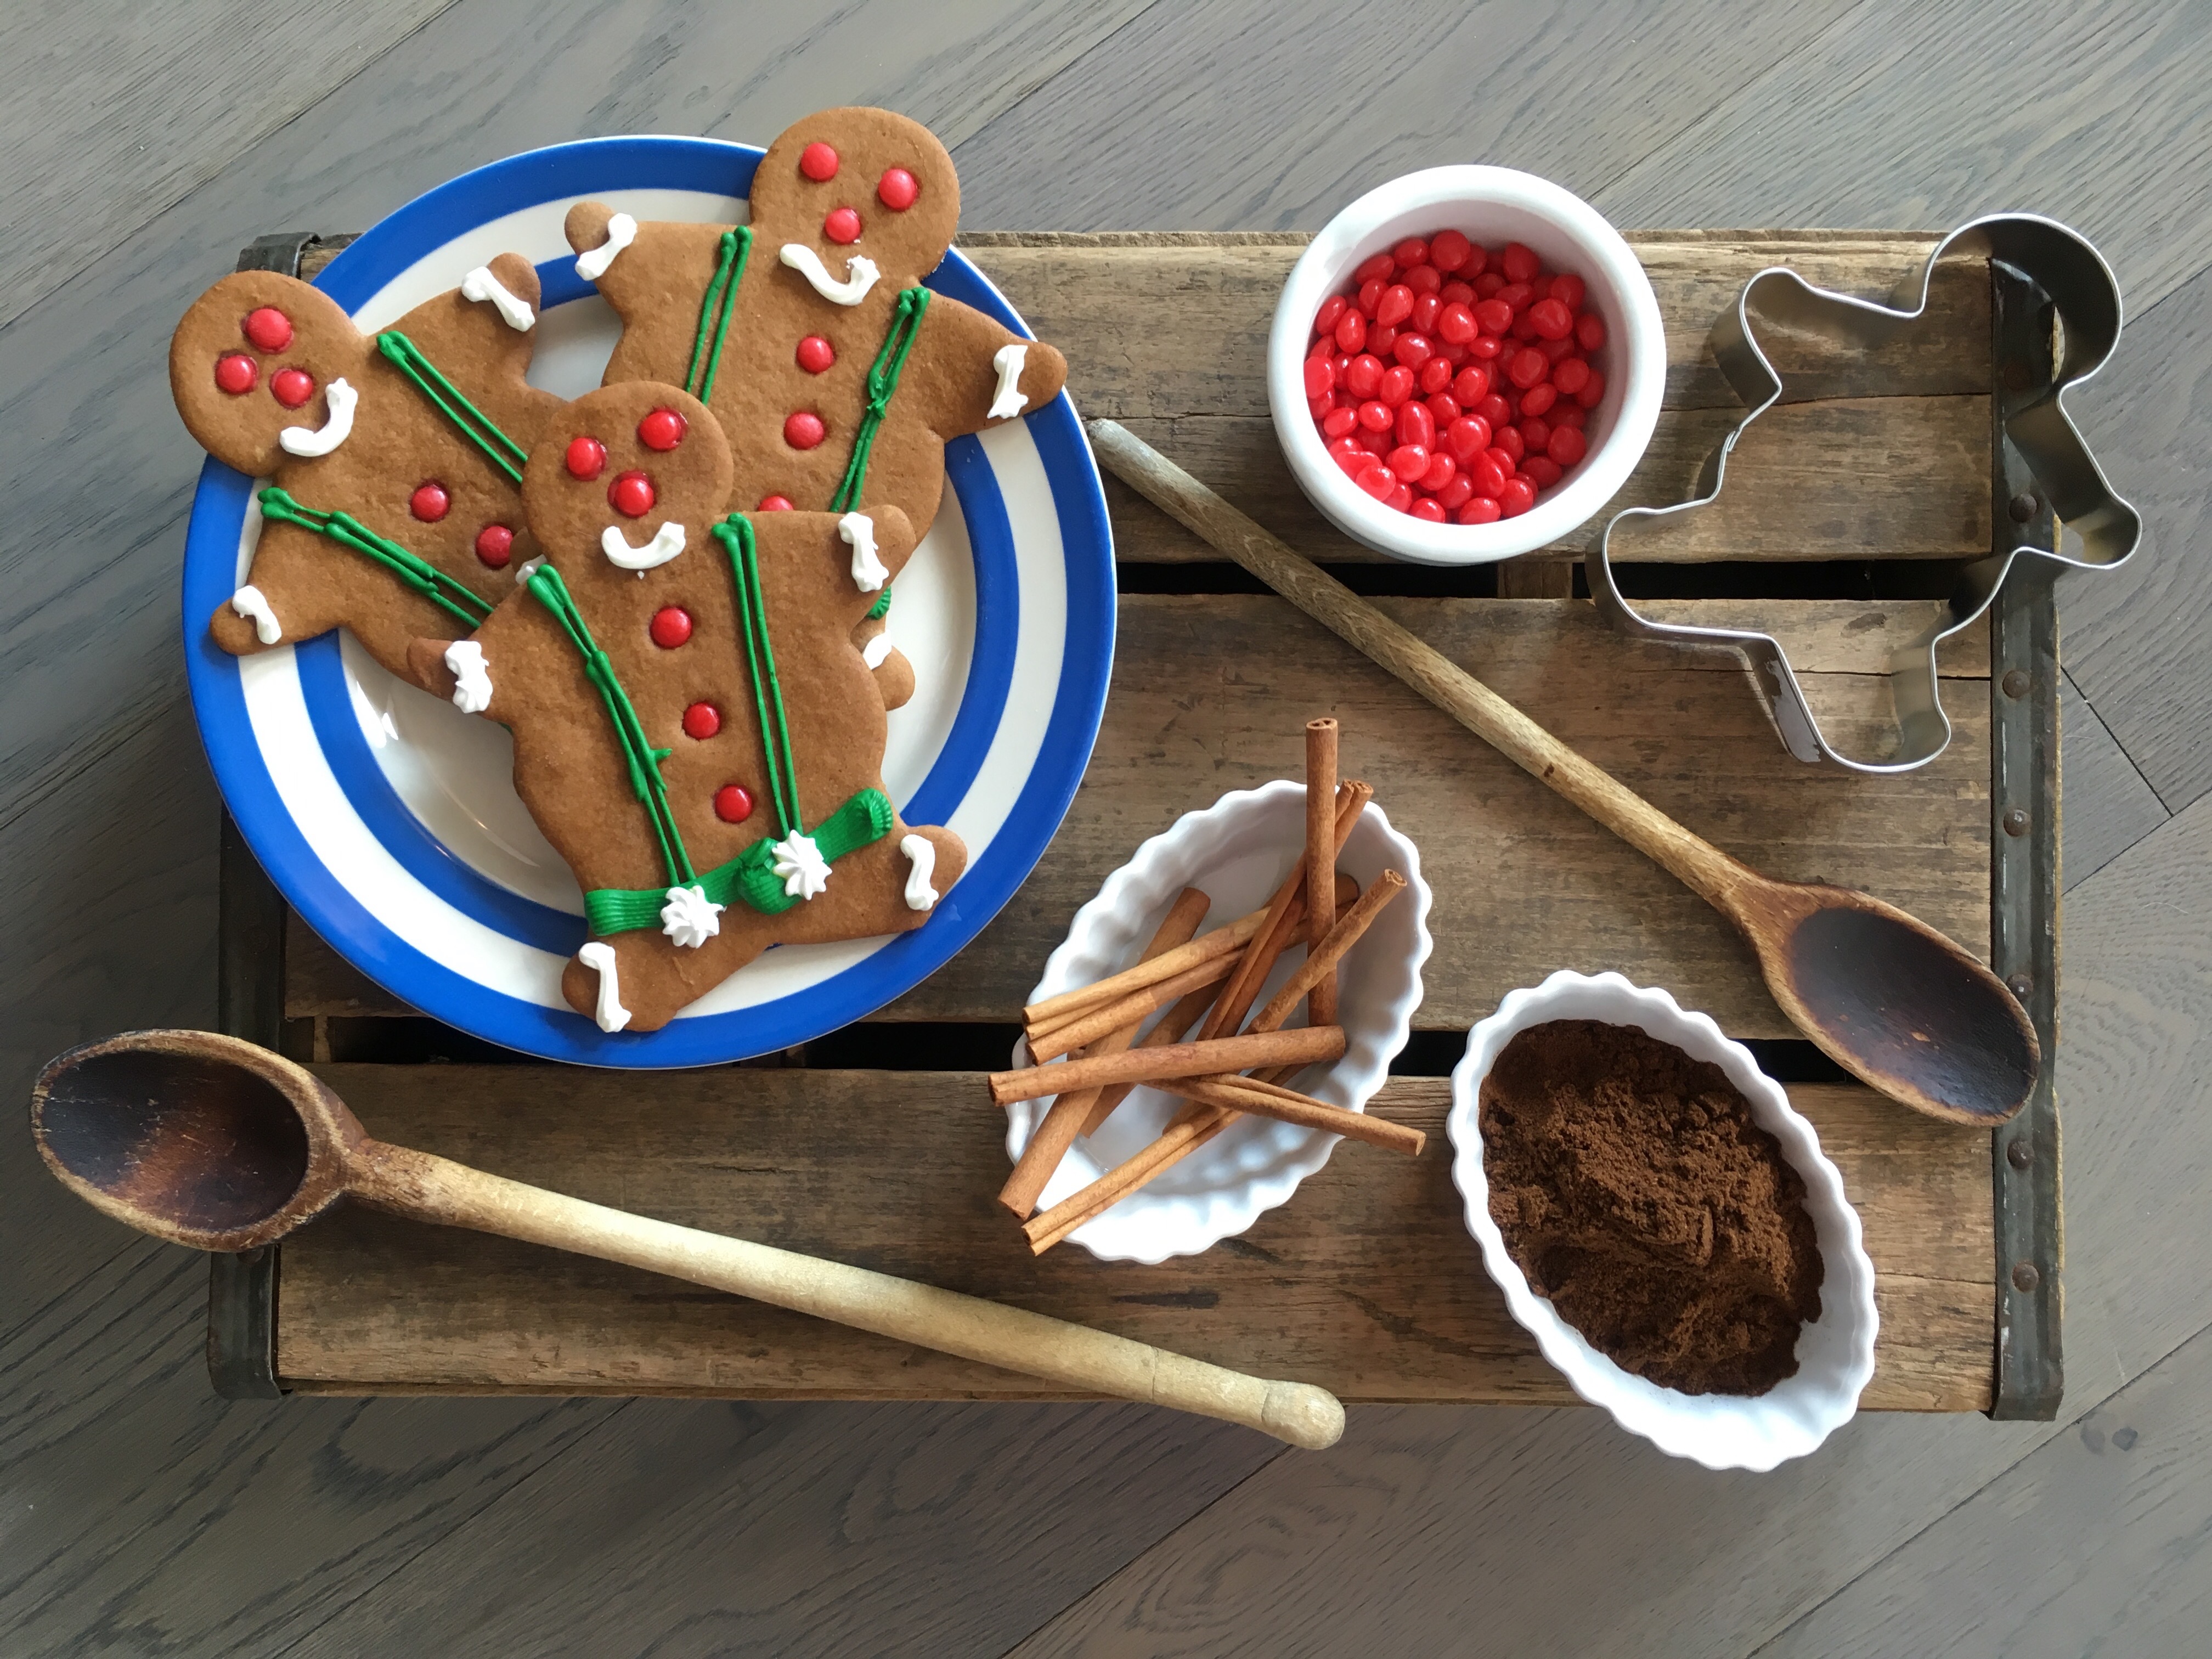 Gingerbread kit photo shoot from Ginger's Breadboys